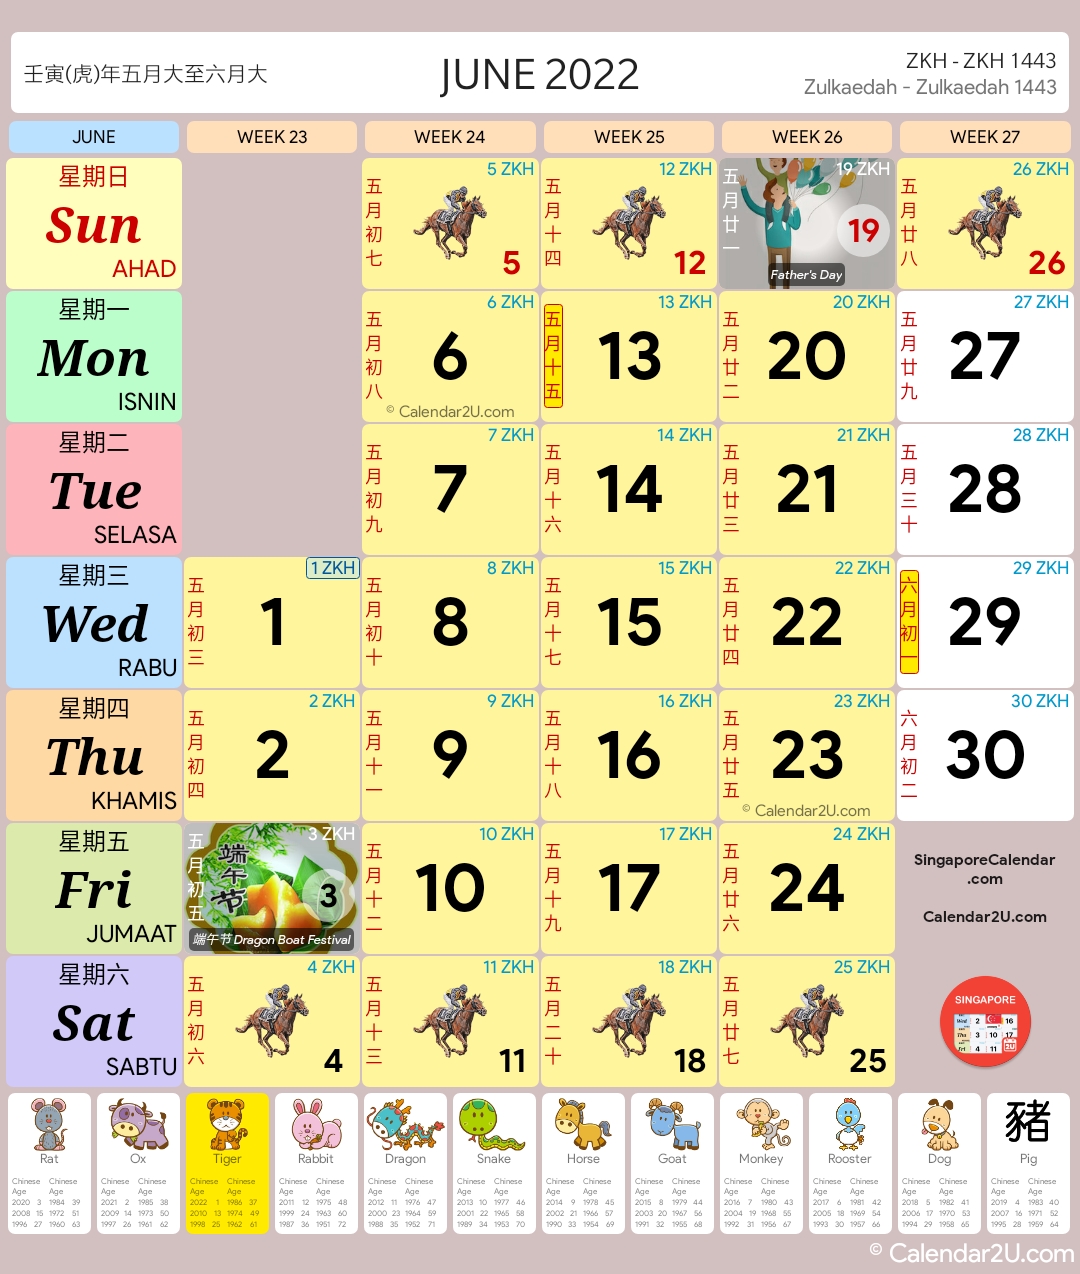 Singapore Calendar Jun 2022